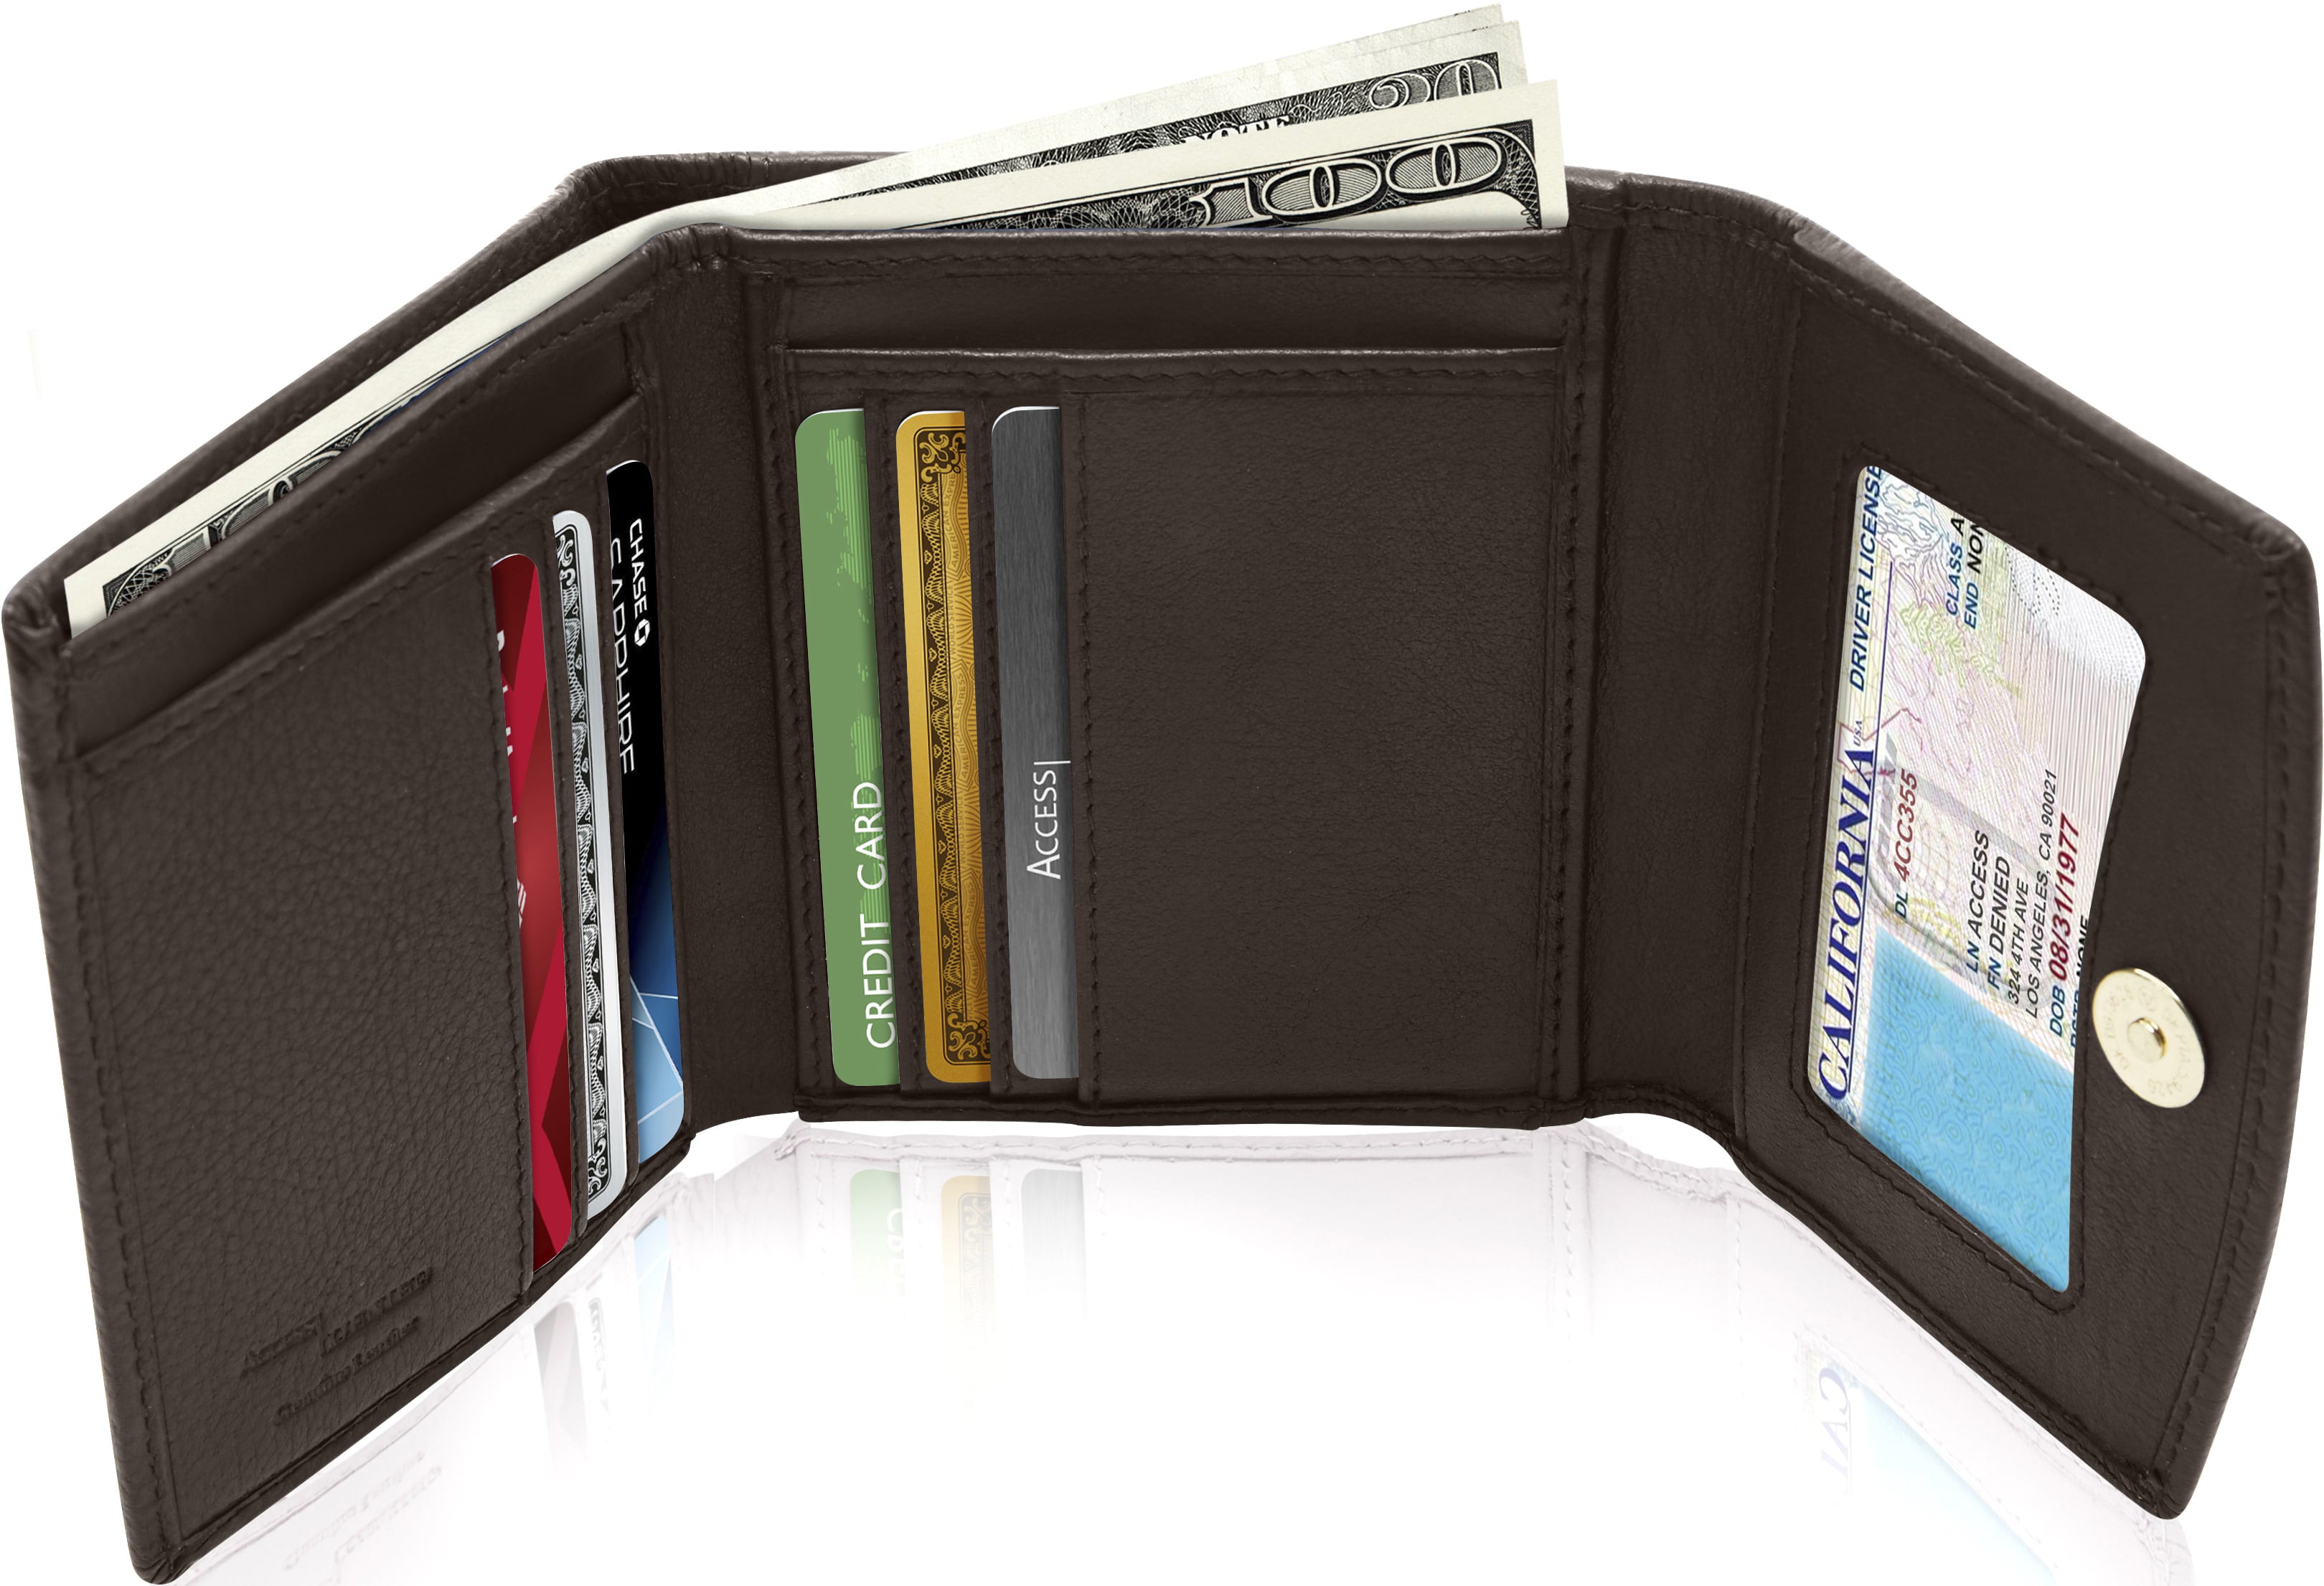 Art Fish Real Leather Passport Holder Wallet Case Cover for Men Women